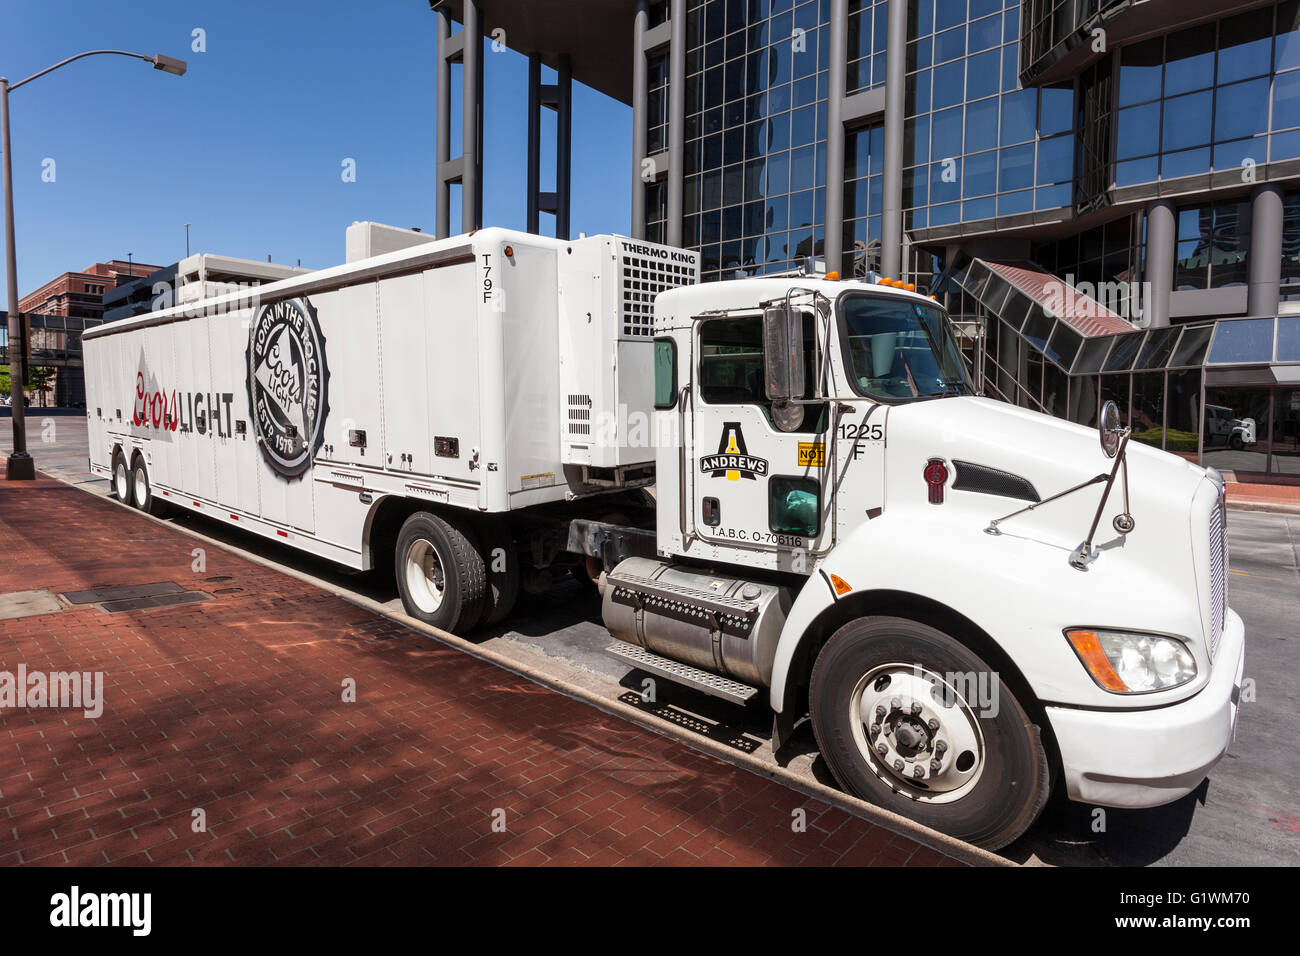 FORT WORTH, USA - 6 avril : la bière Coors Light delivery truck dans la ville de Fort Worth. 6 avril 2016 à Fort Worth, Texas, USA Banque D'Images